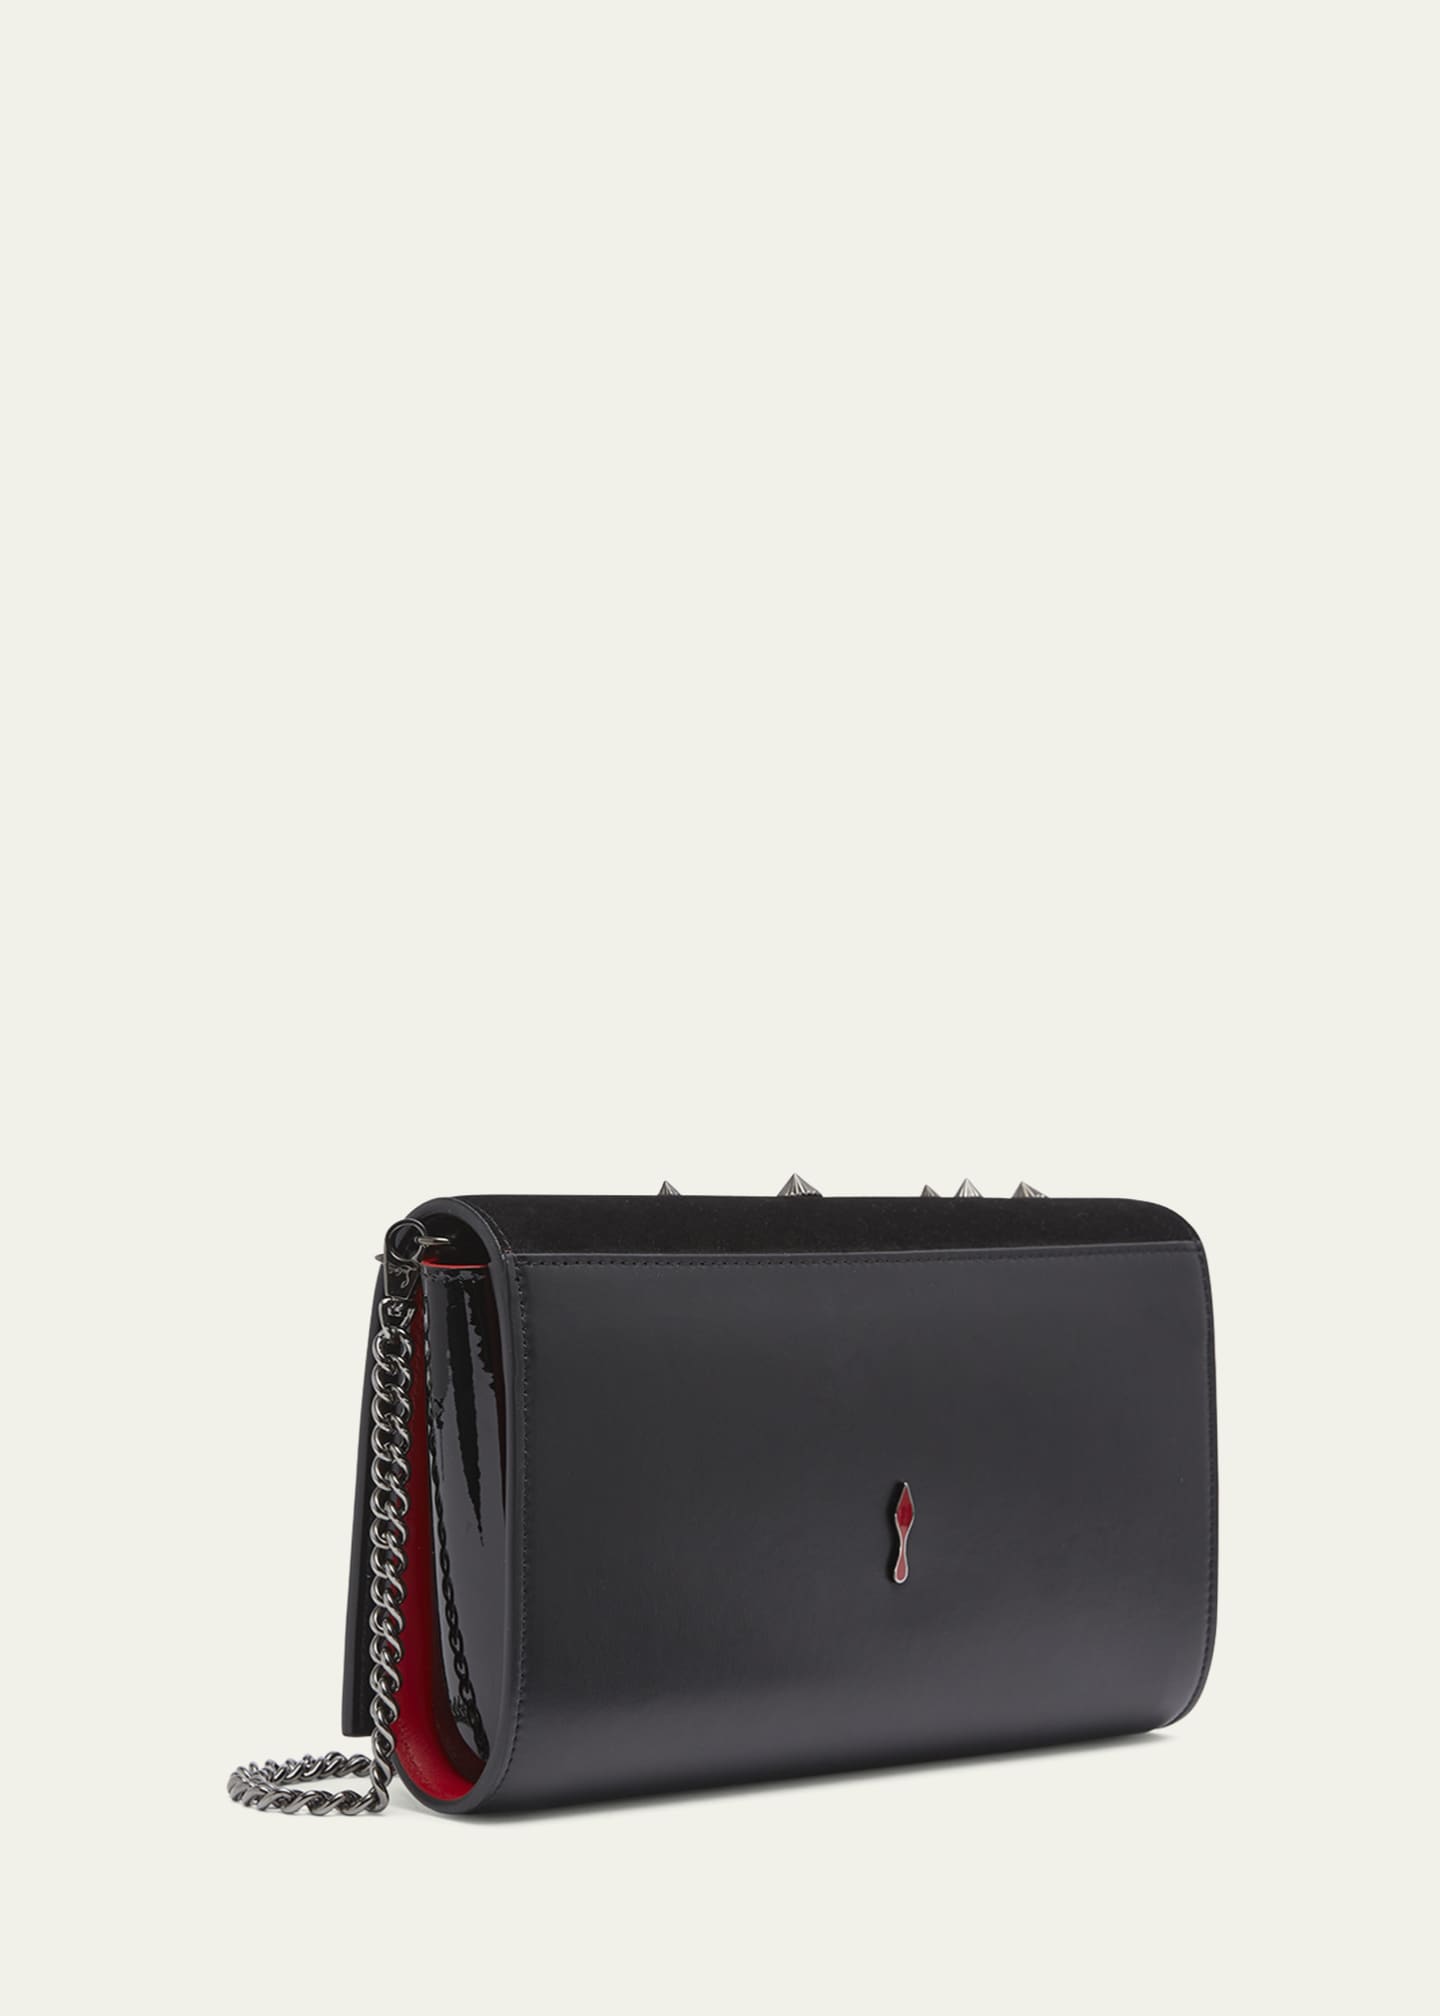 Christian Louboutin Clutch Paloma Spike Black Leather Shoulder Bag